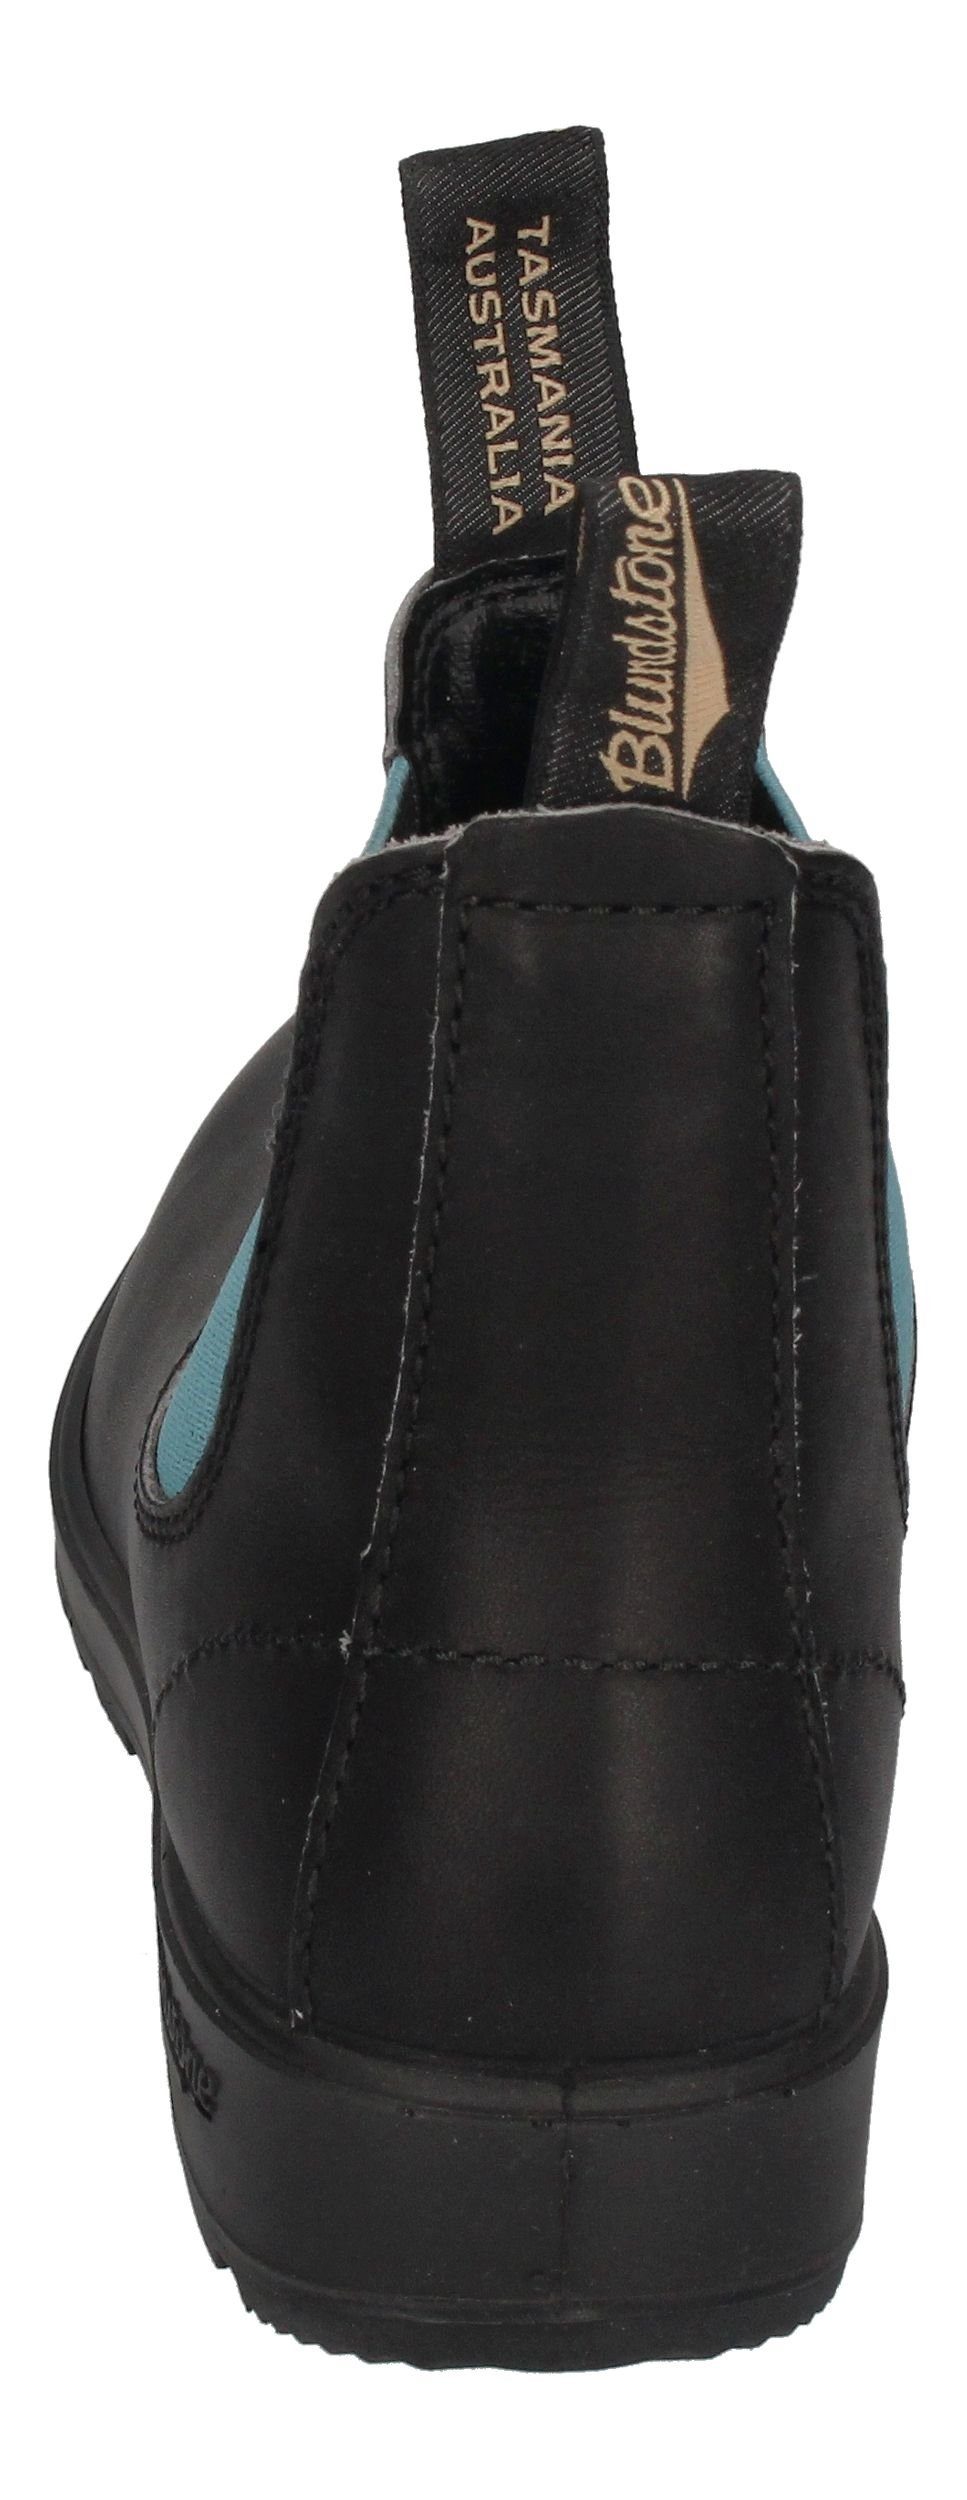 Blundstone Leather Elastic Chelseaboots Series Teal 500 Original BLU2207-001 Black with